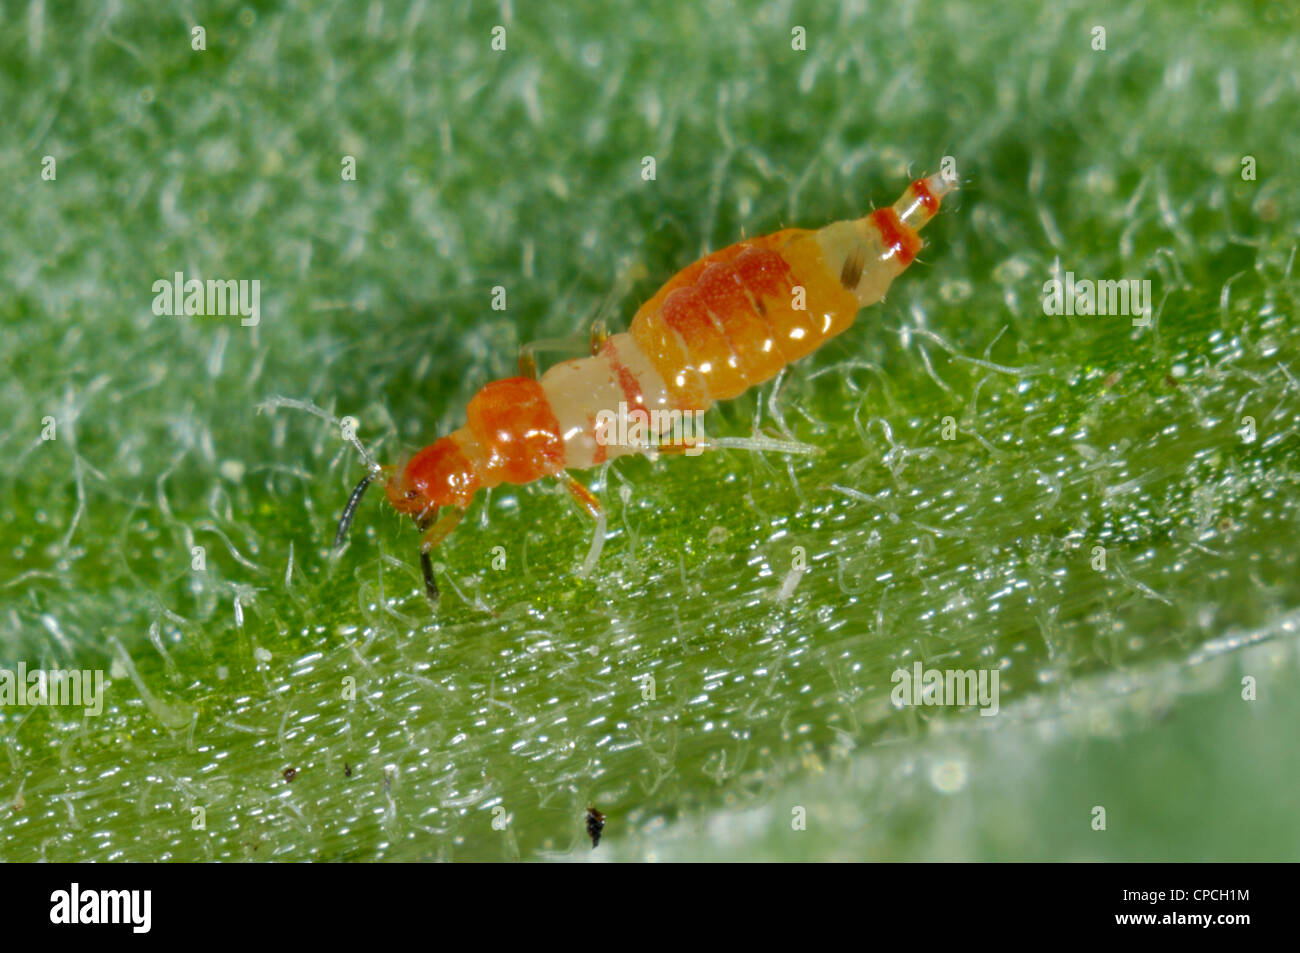 Predatory thrips (Franklinothrips vespiformis) larva Stock Photo